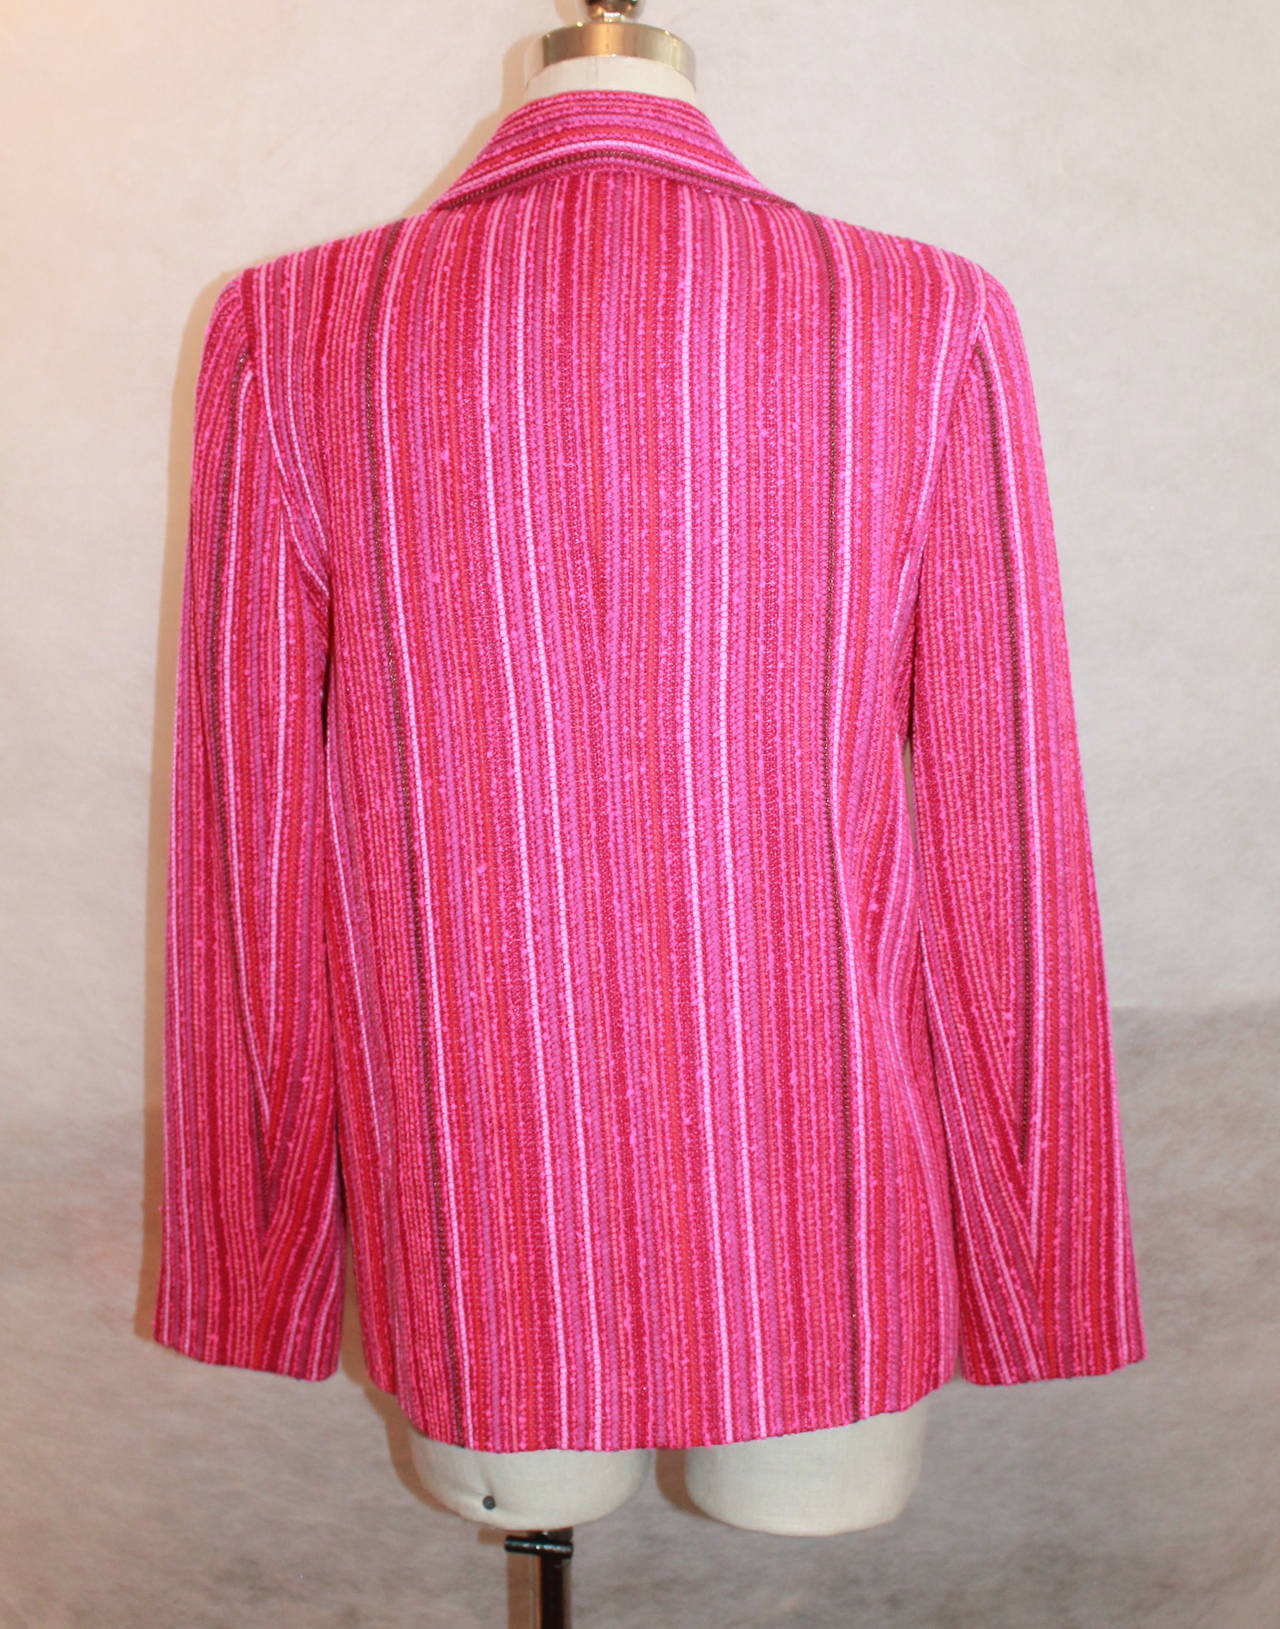 Chanel Magenta Striped Wool Blend Jacket - 40 - Circa 2001 1